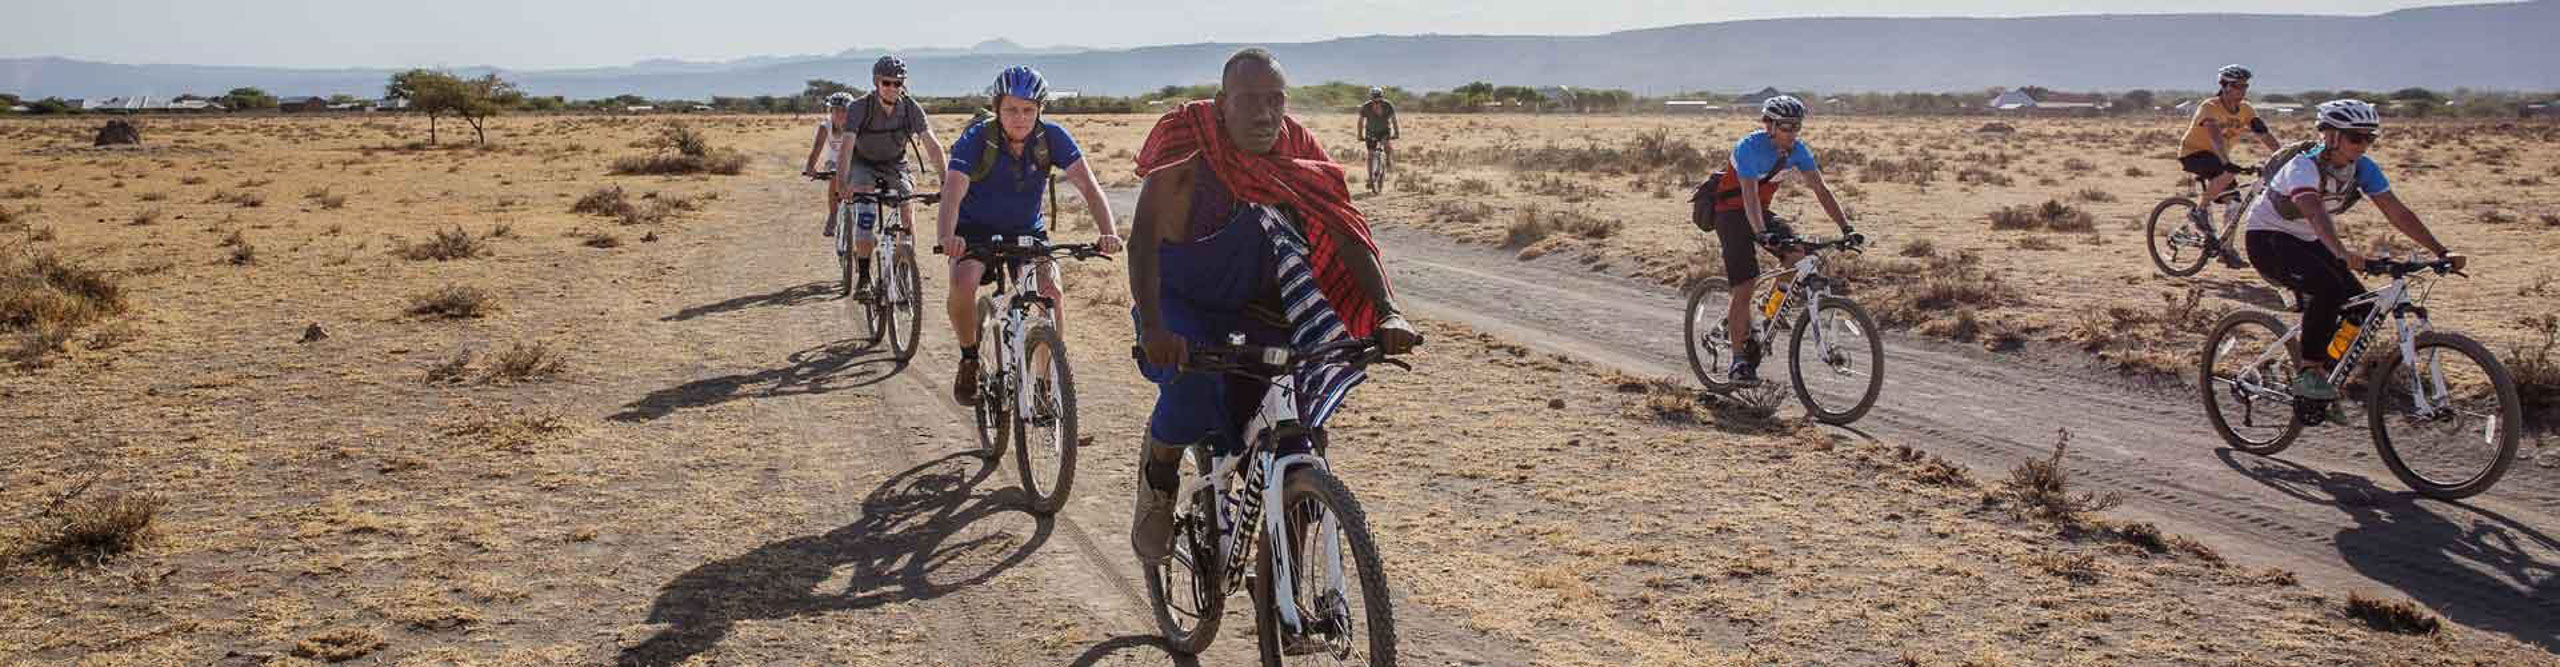 Group cycling in Tanzania 